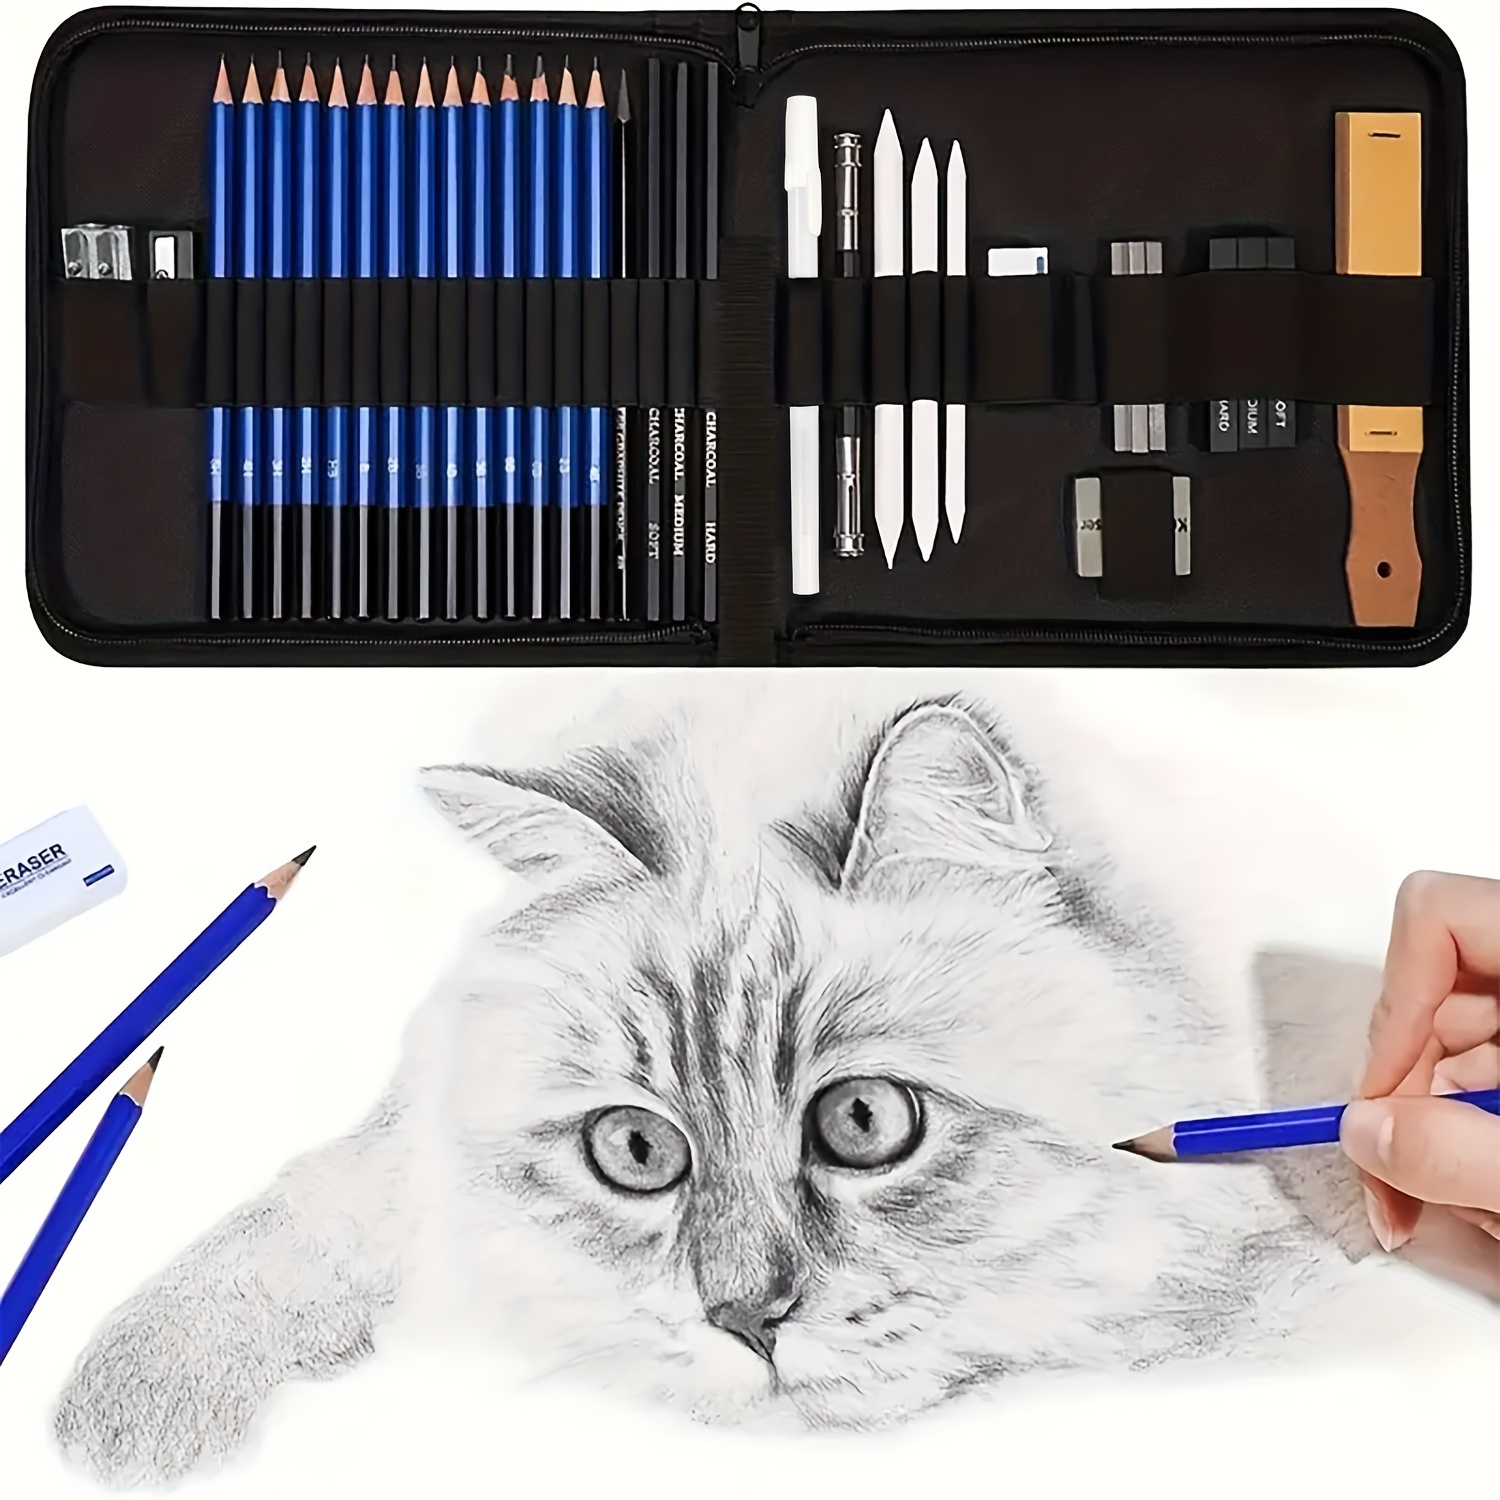 

33 Pieces Pro Drawing Kit Sketching Pencils Set, Portable Zippered Travel Case-charcoal Pencils, Sketch Pencils, Charcoal Stick, Sharpener, Eraser.art Supplies For Artists Beginner Adults Teens